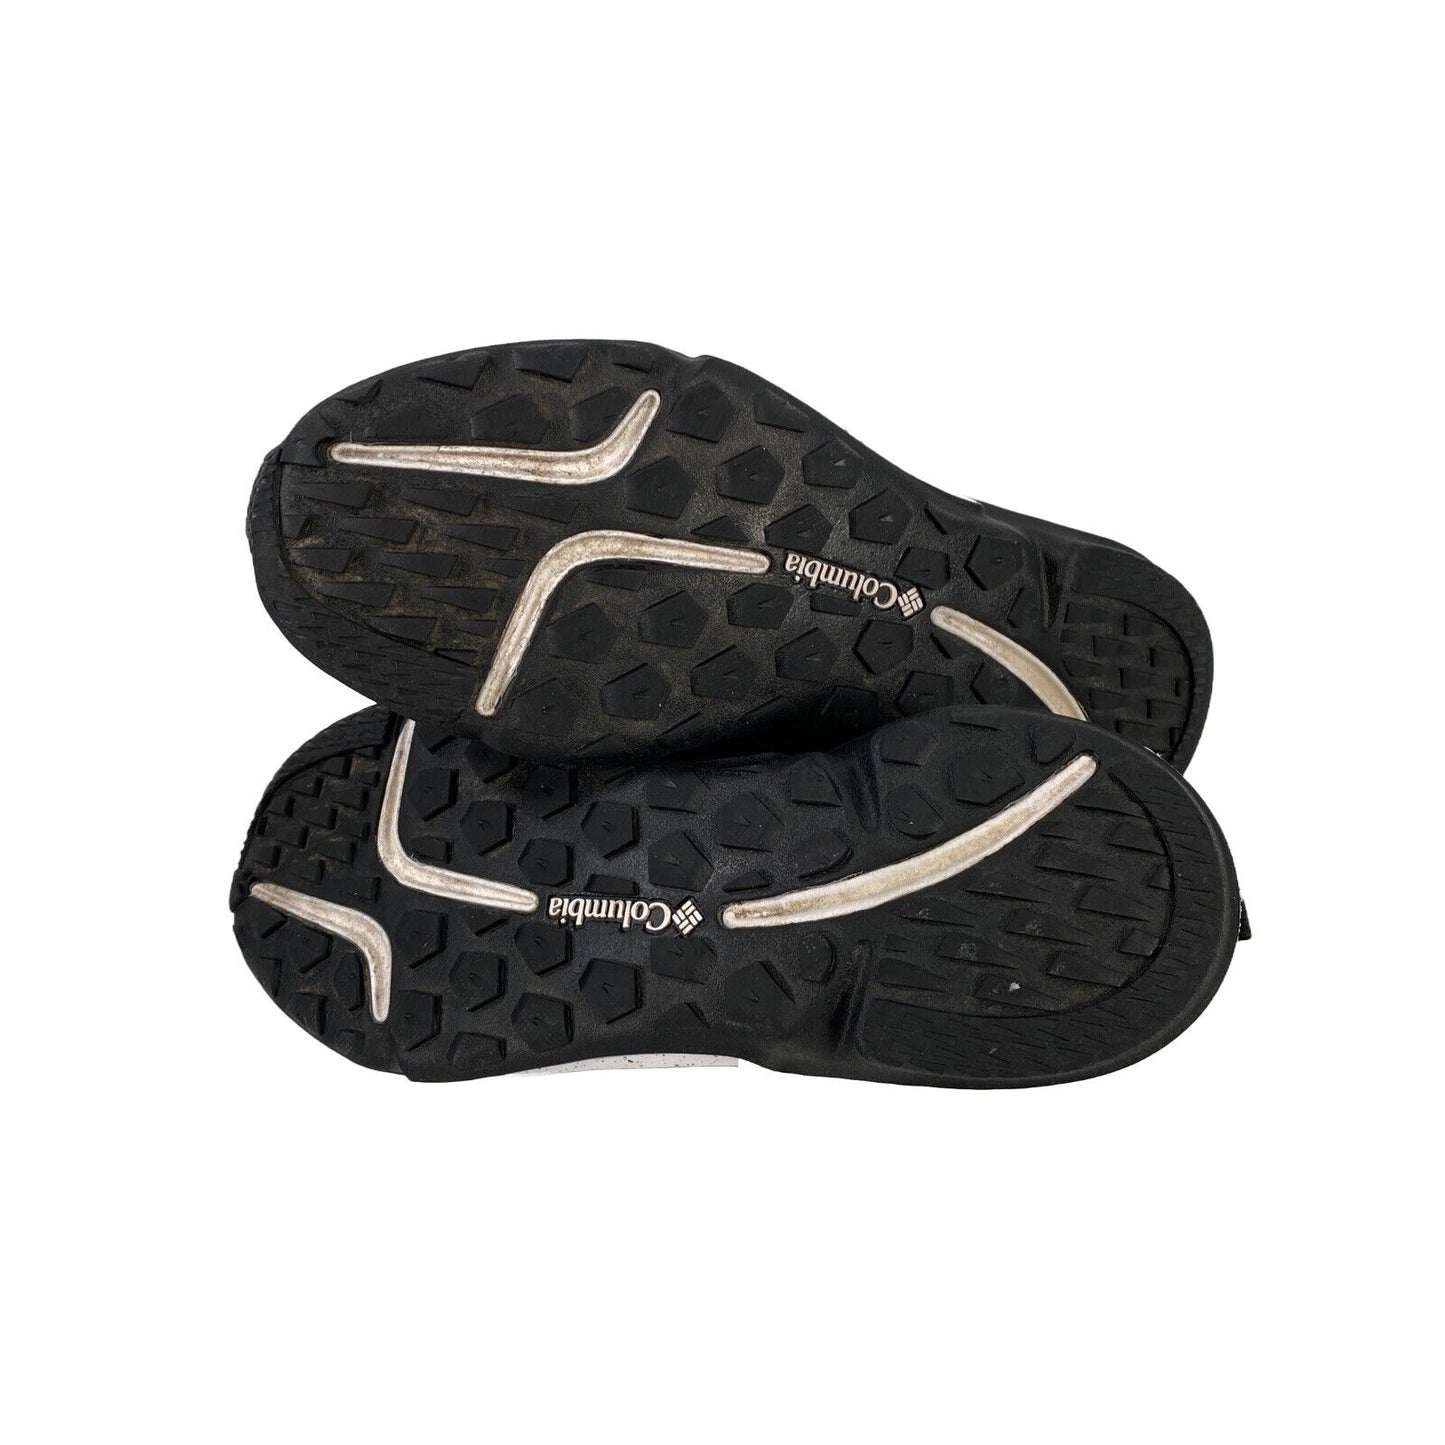 Columbia Women's Black Vitesse Trail Hiking Sneakers Shoes BL0076 - 10